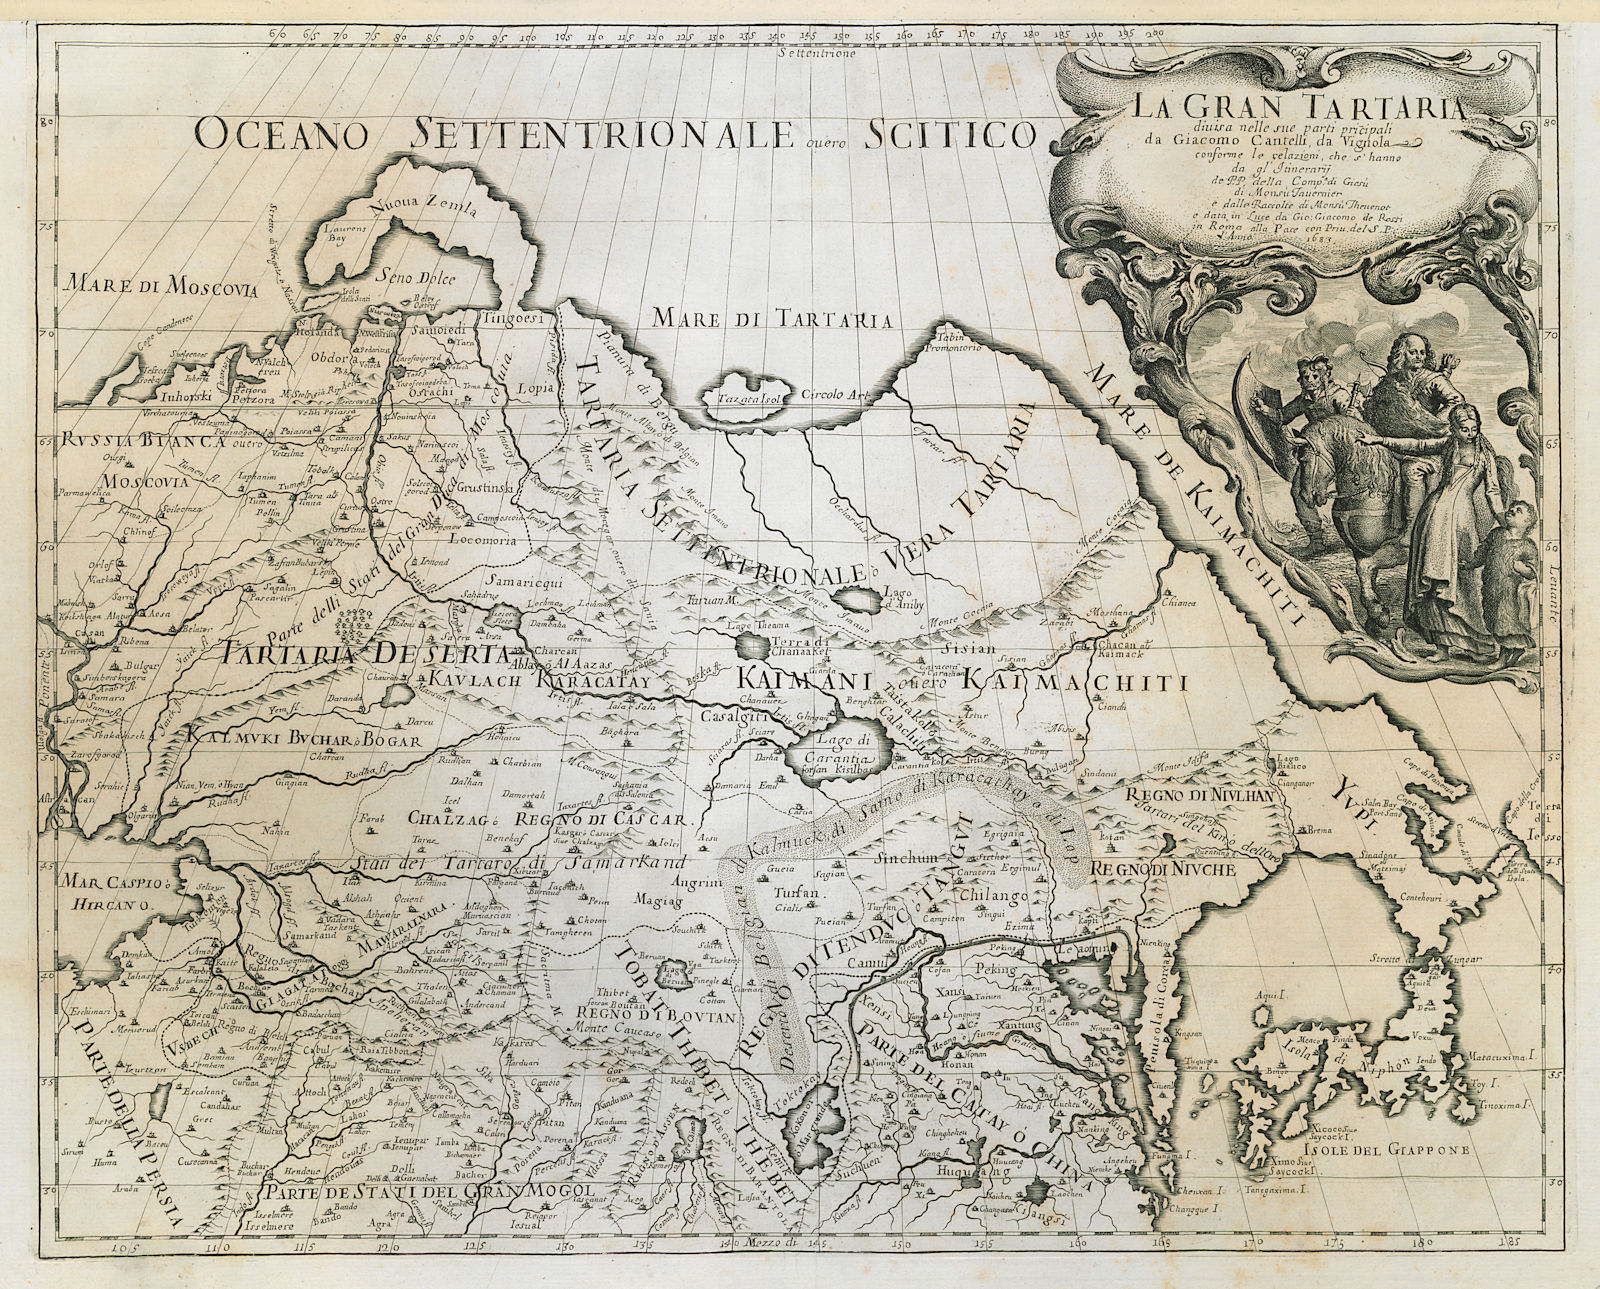 Associate Product La Gran Tartaria. Great Tartary. Central/North Asia. ROSSI / CANTELLI 1683 map